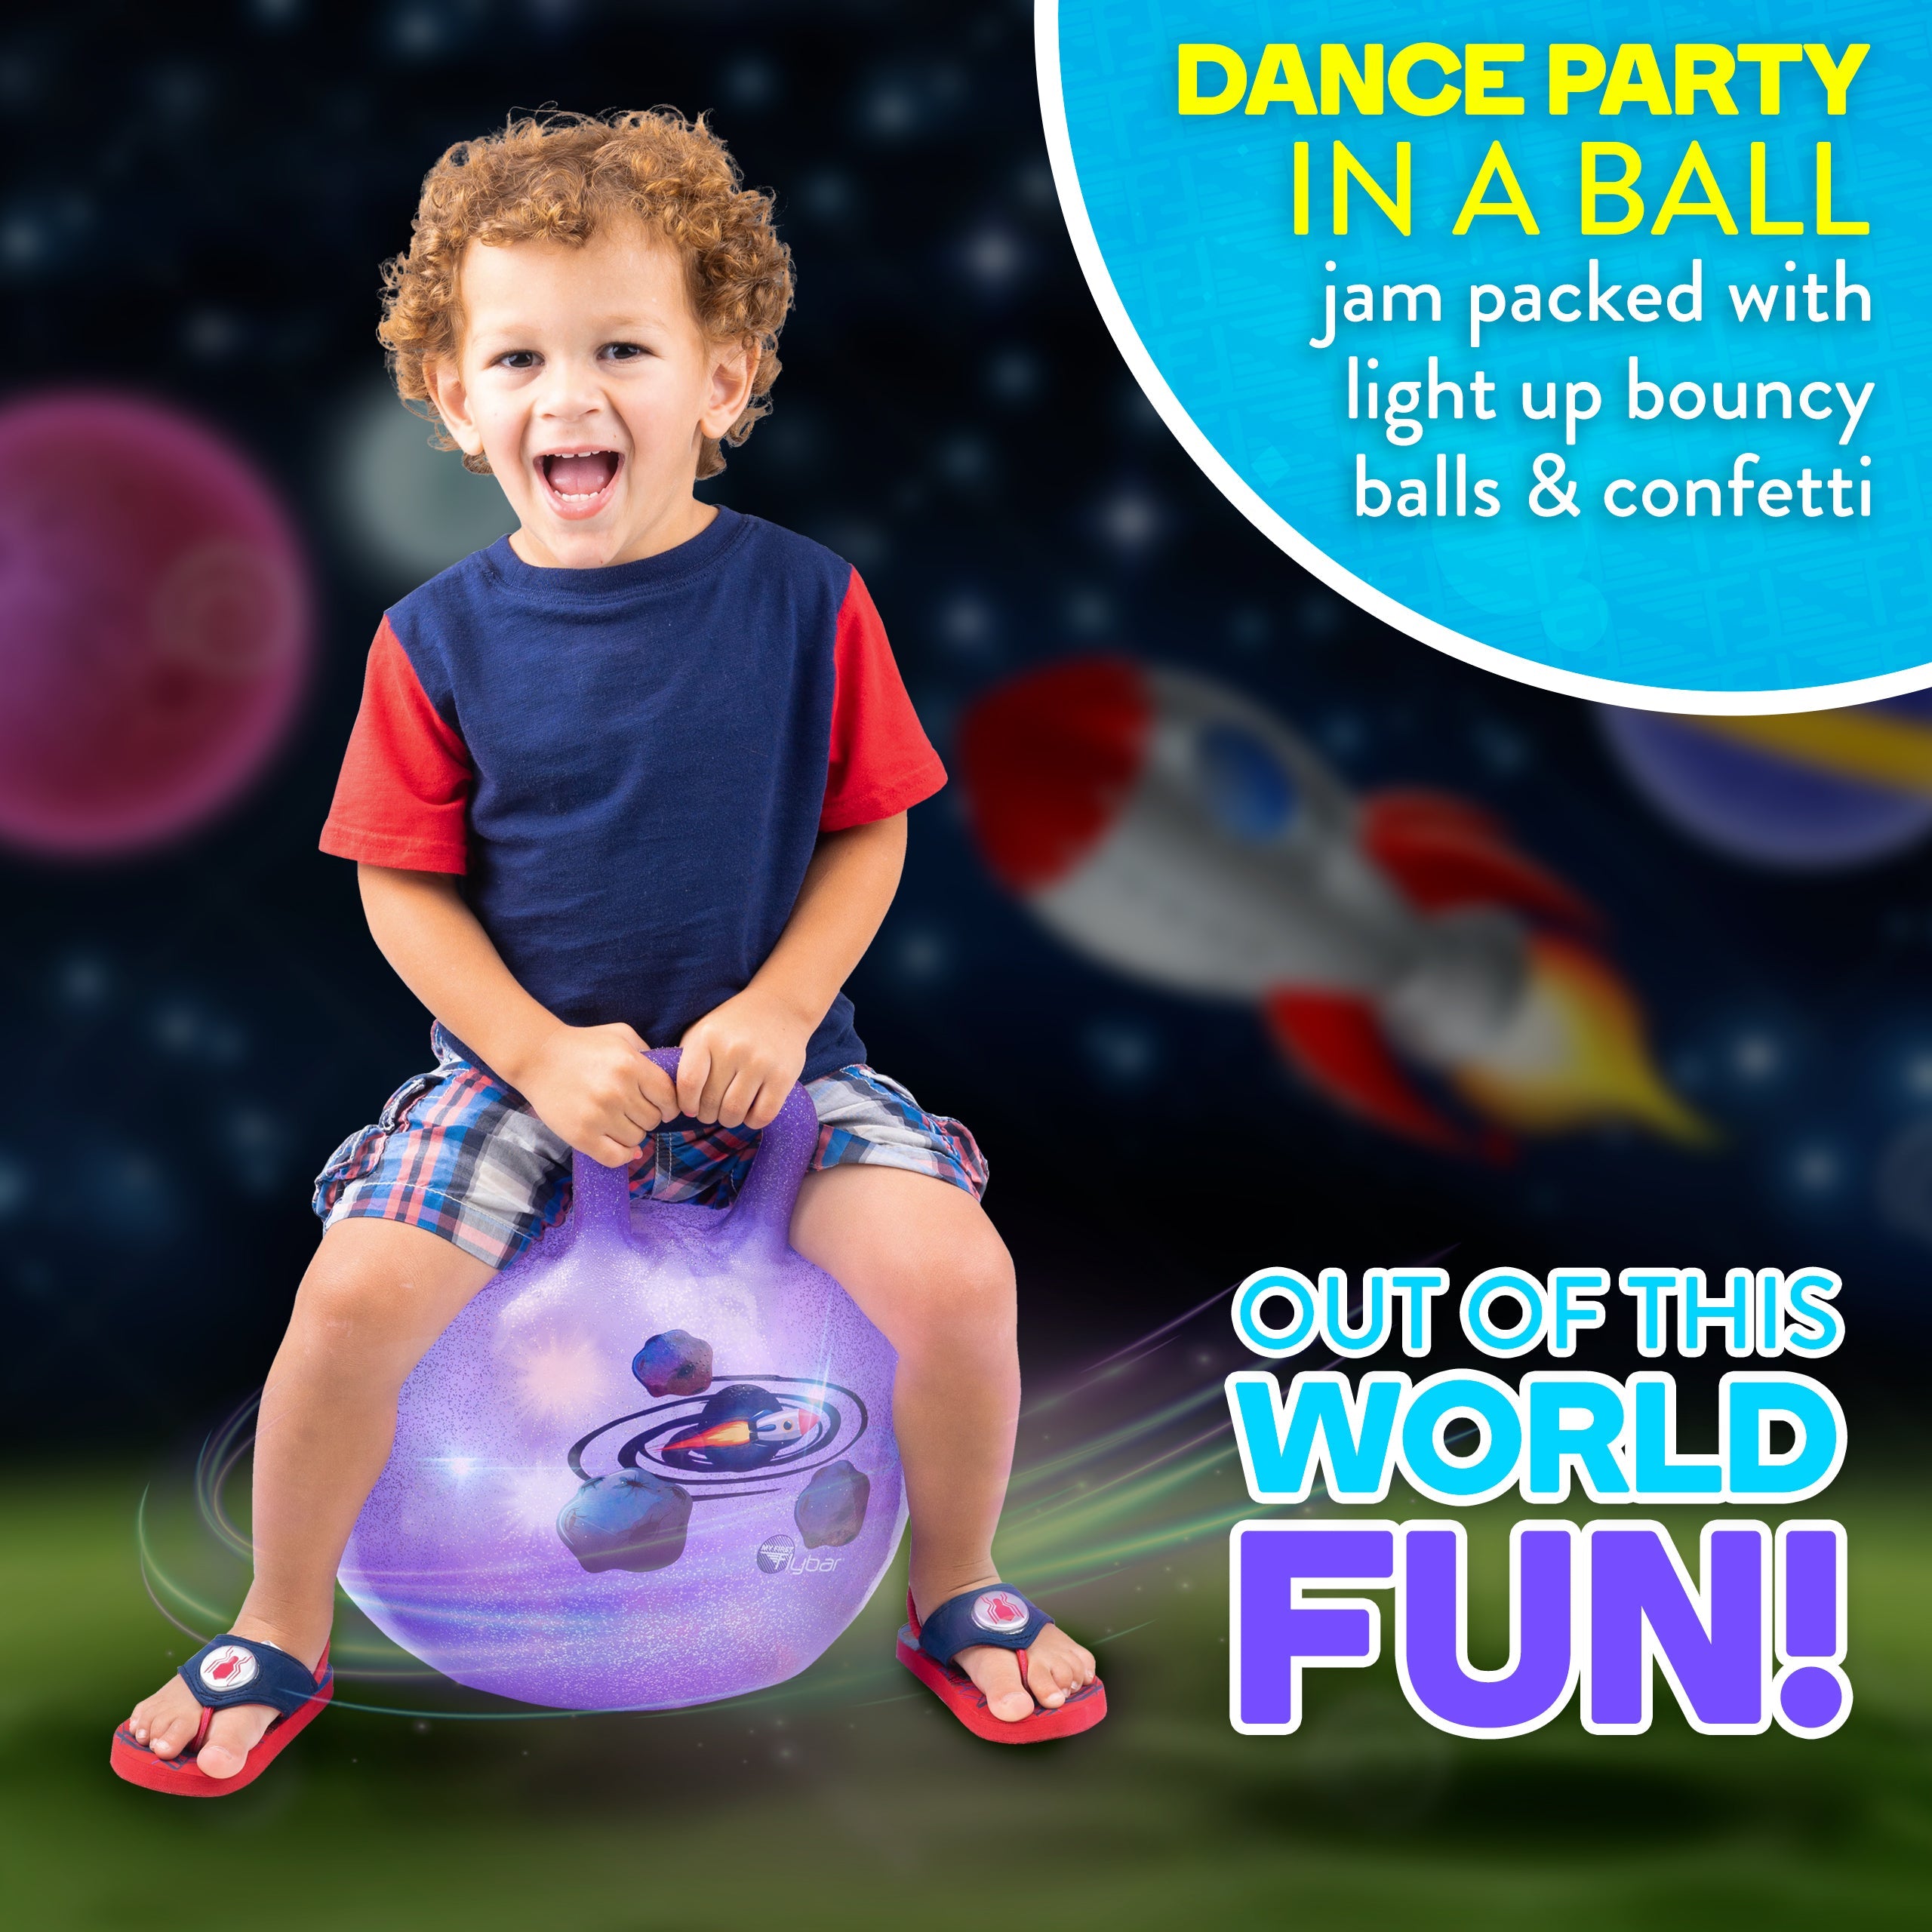 LED Light Up Dance Party Hopper Ball, Indoor/Outdoor, Kids 3+